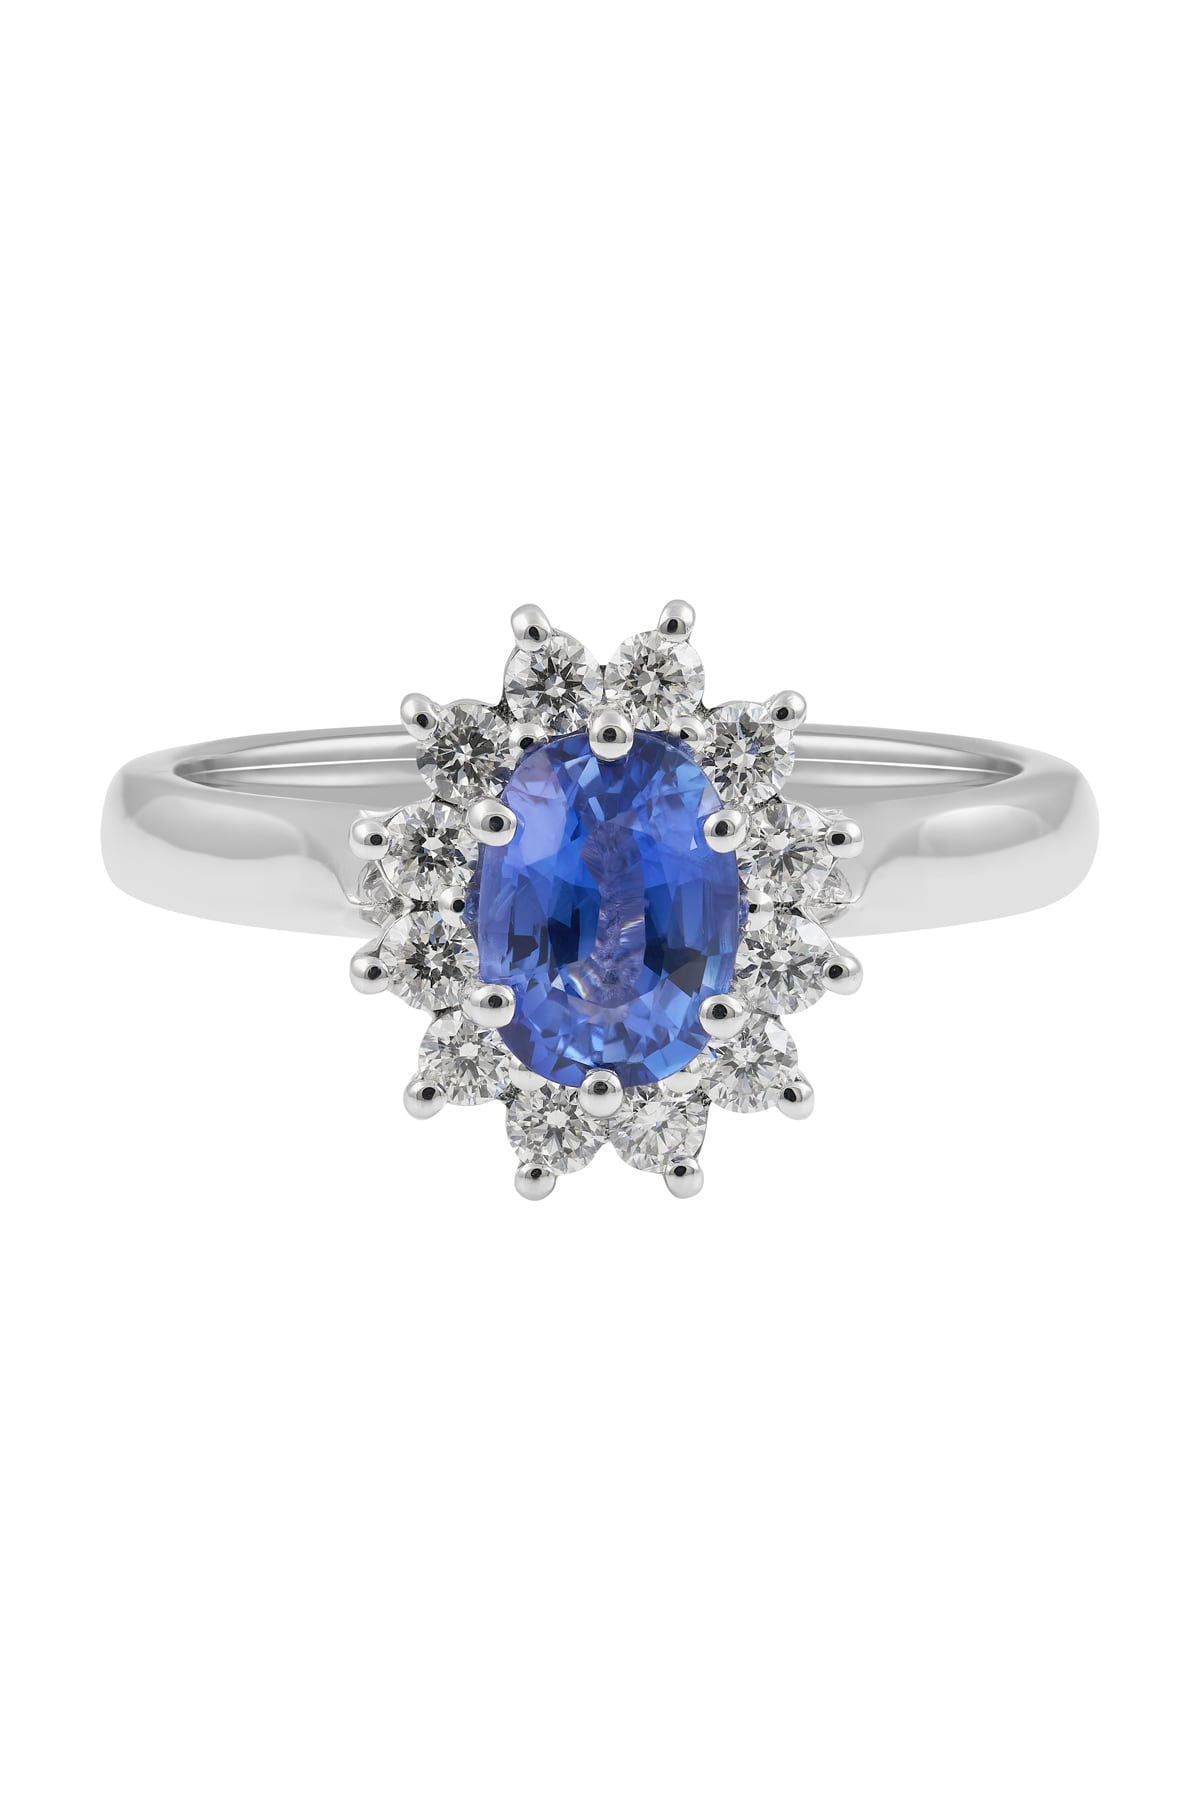 1.08 Carat Ceylon Sapphire & Diamond Cluster Style Ring from LeGassick Jewellery.